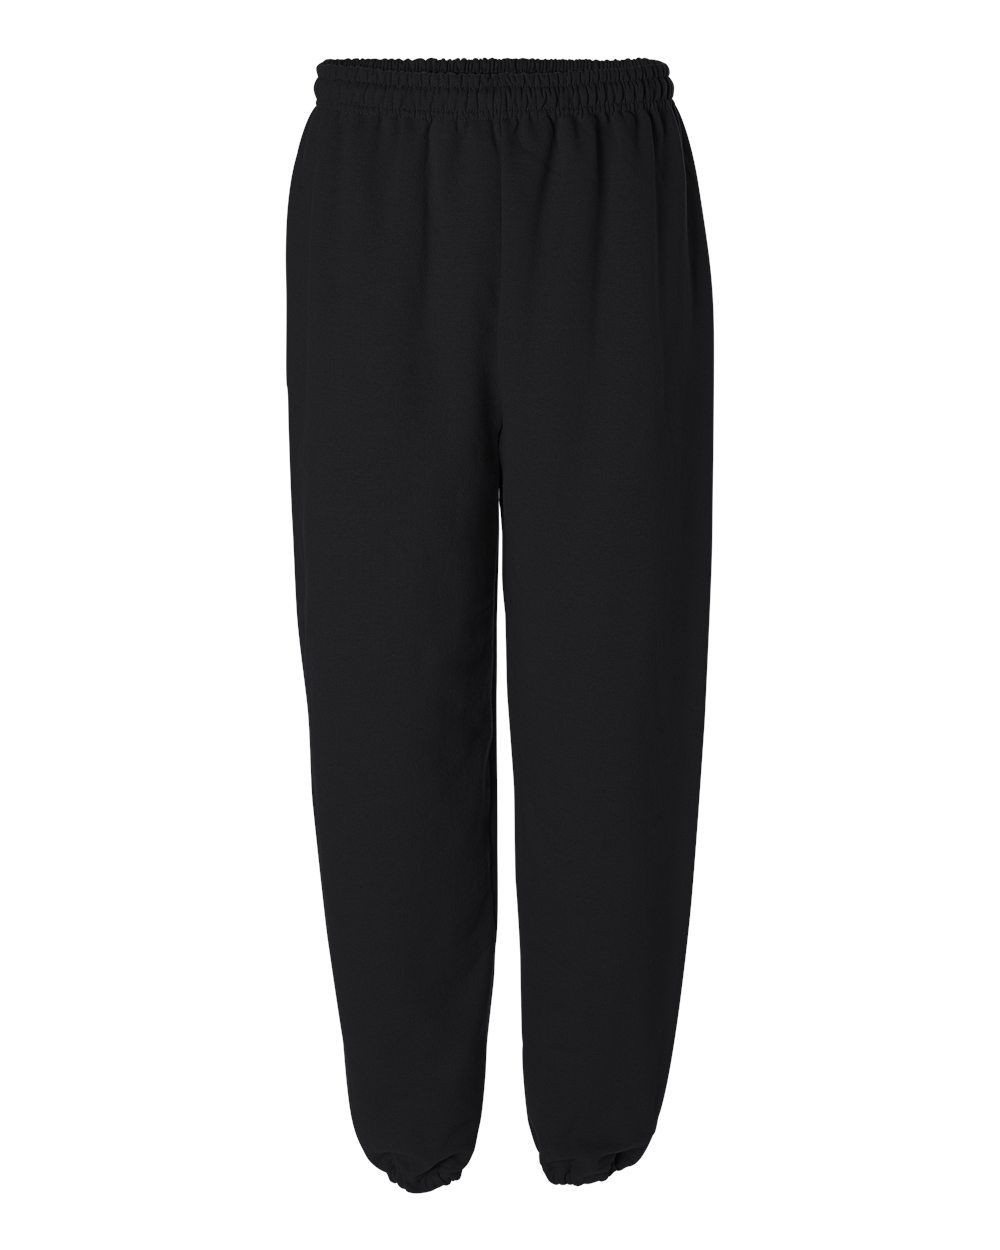 Black Bell Bottom Foldover Waist Sweatpants-Black-1X